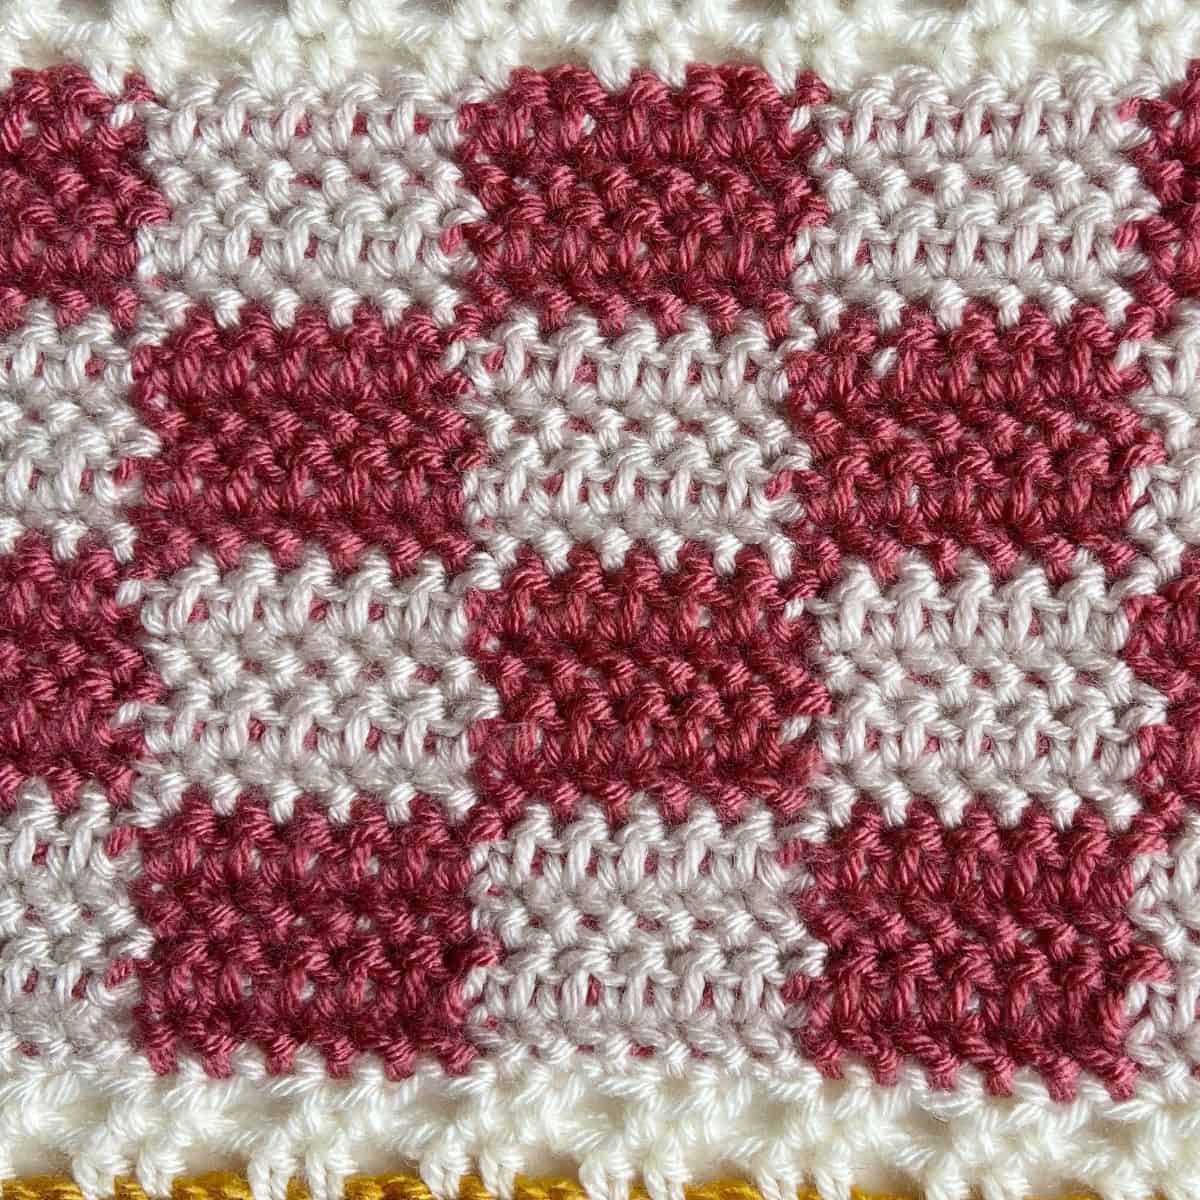 Gingham crochet stitch tutorial.